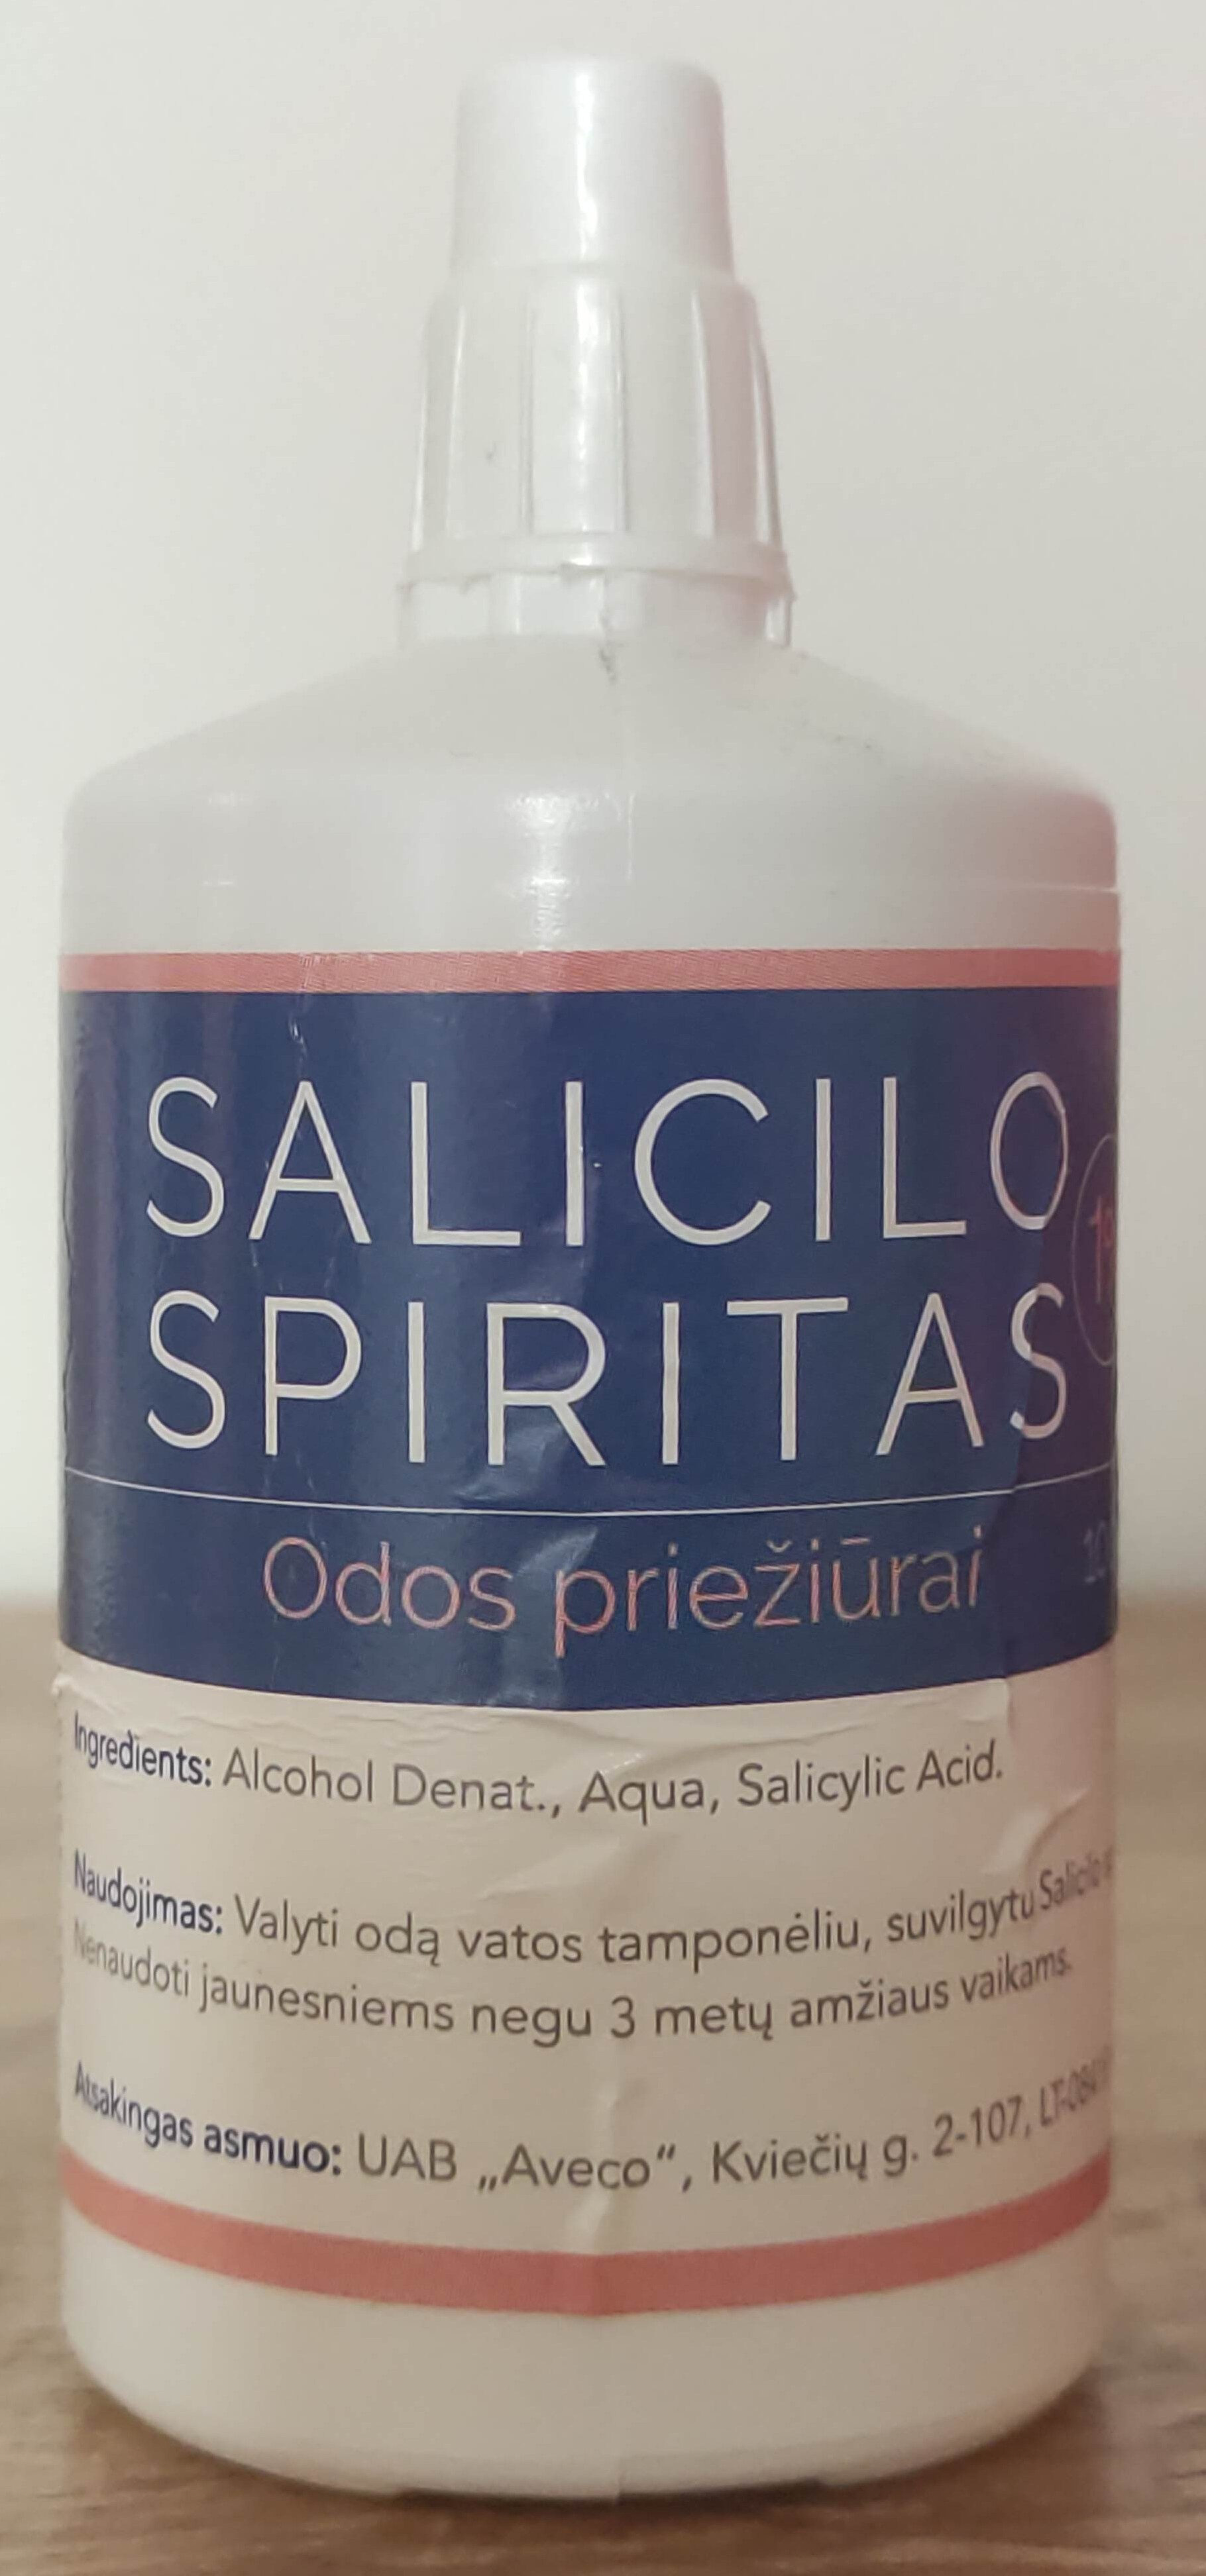 Salicilo spiritas - 製品 - lt